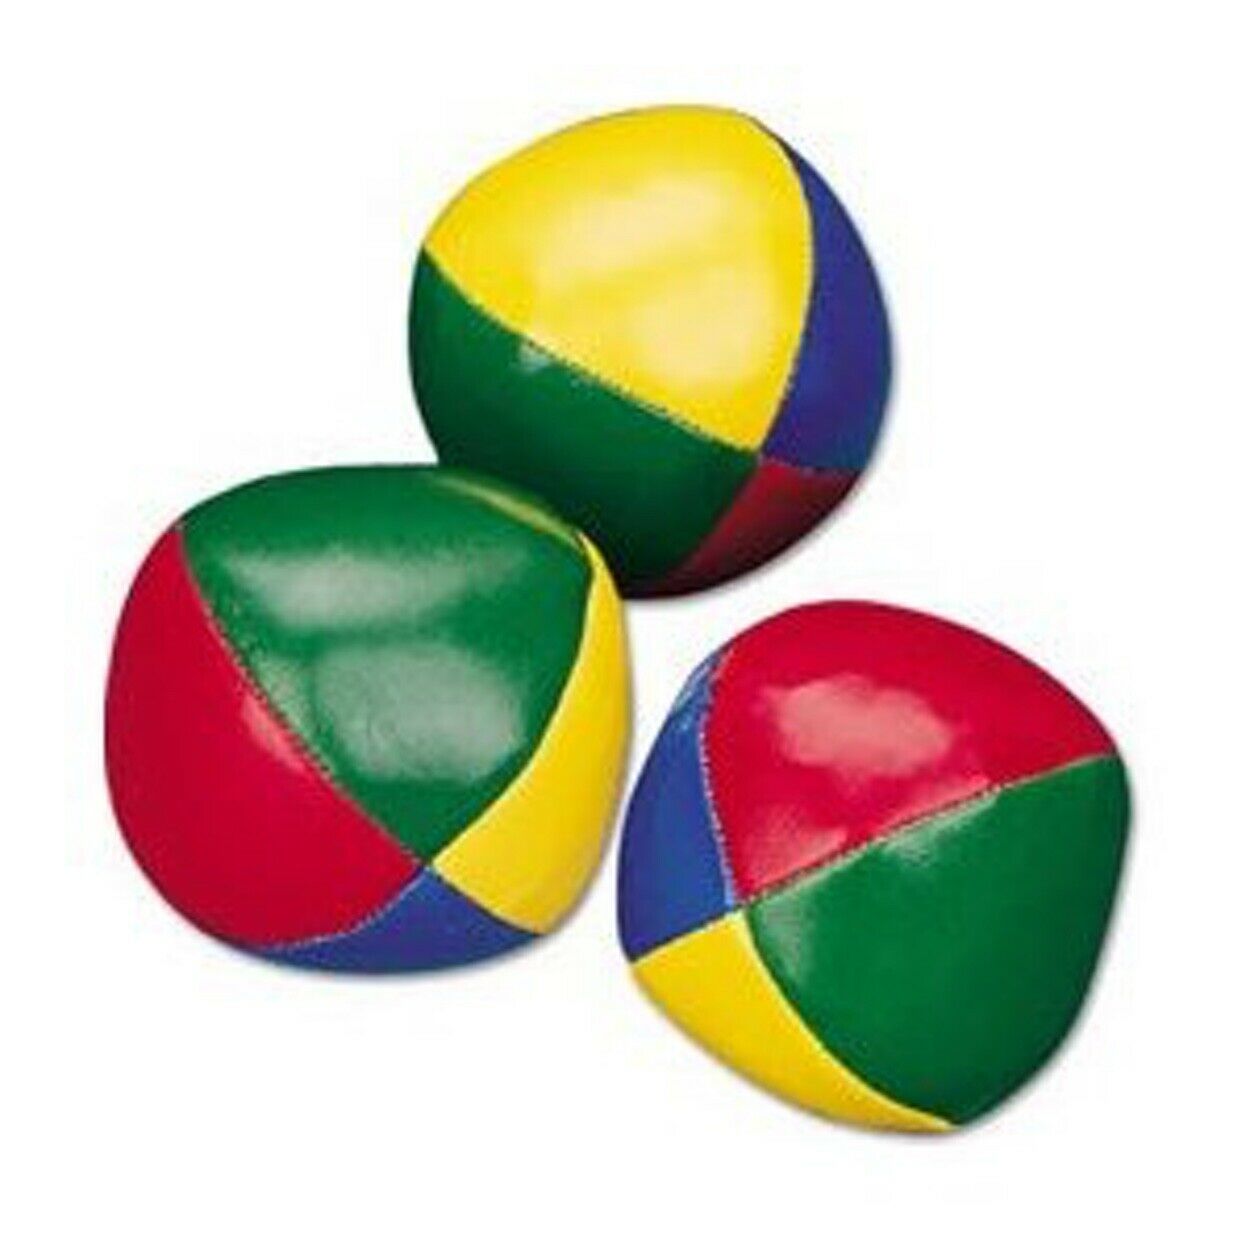 Professional Juggling Balls - Large